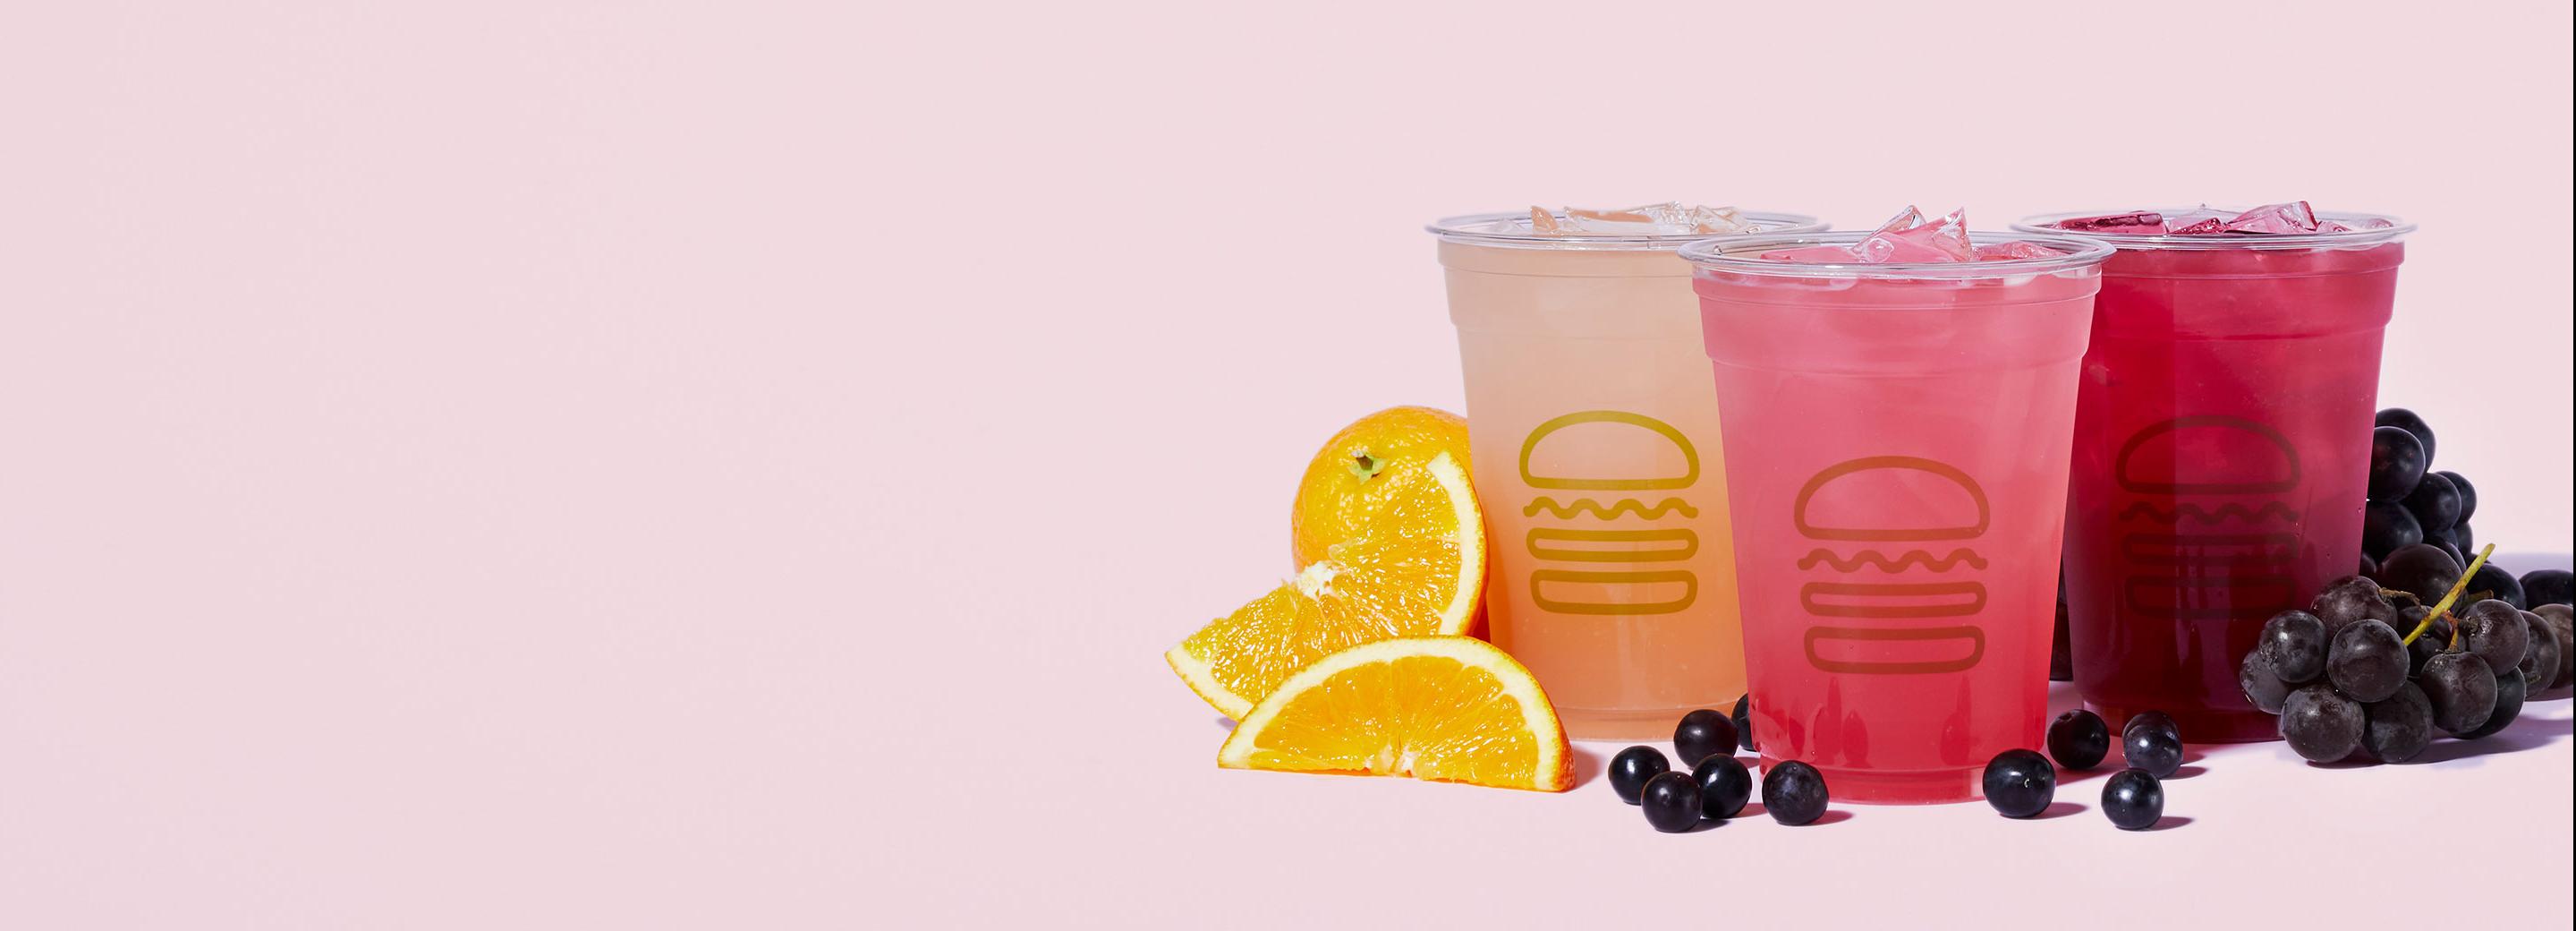 Yuzu Orange Cider, Harvest Berry Lemonade, Concord Grape Punch